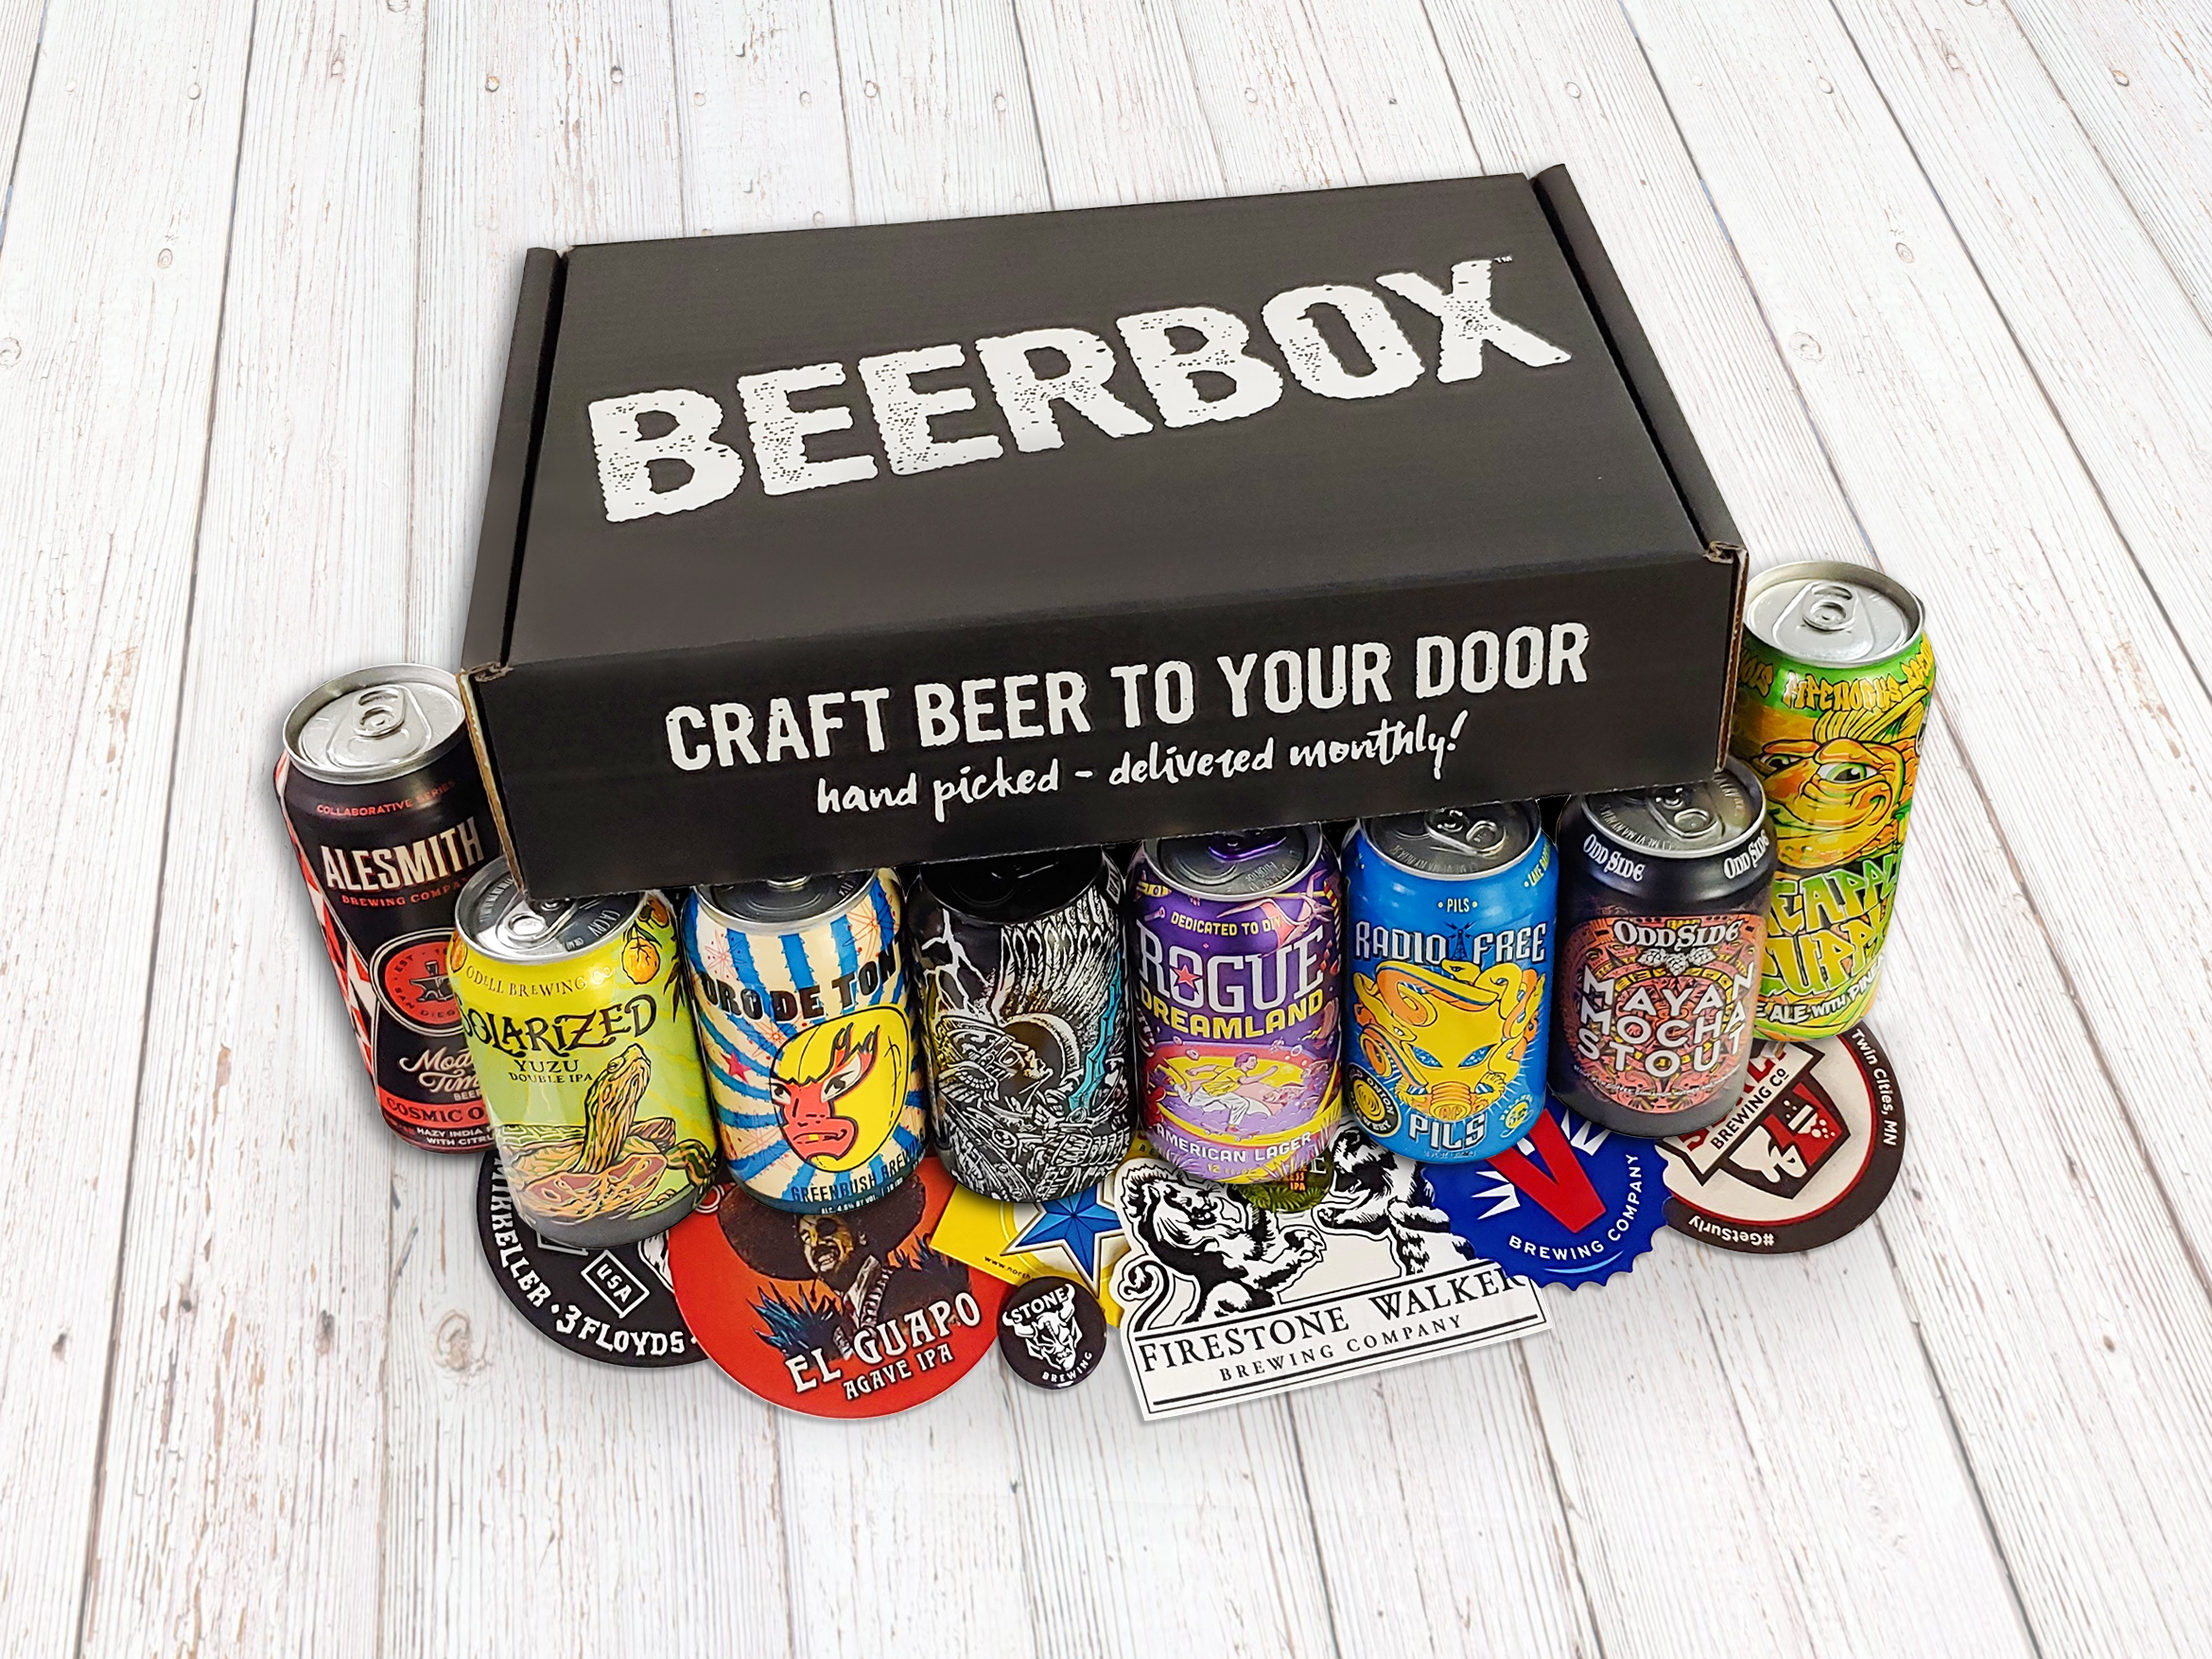 BeerBox